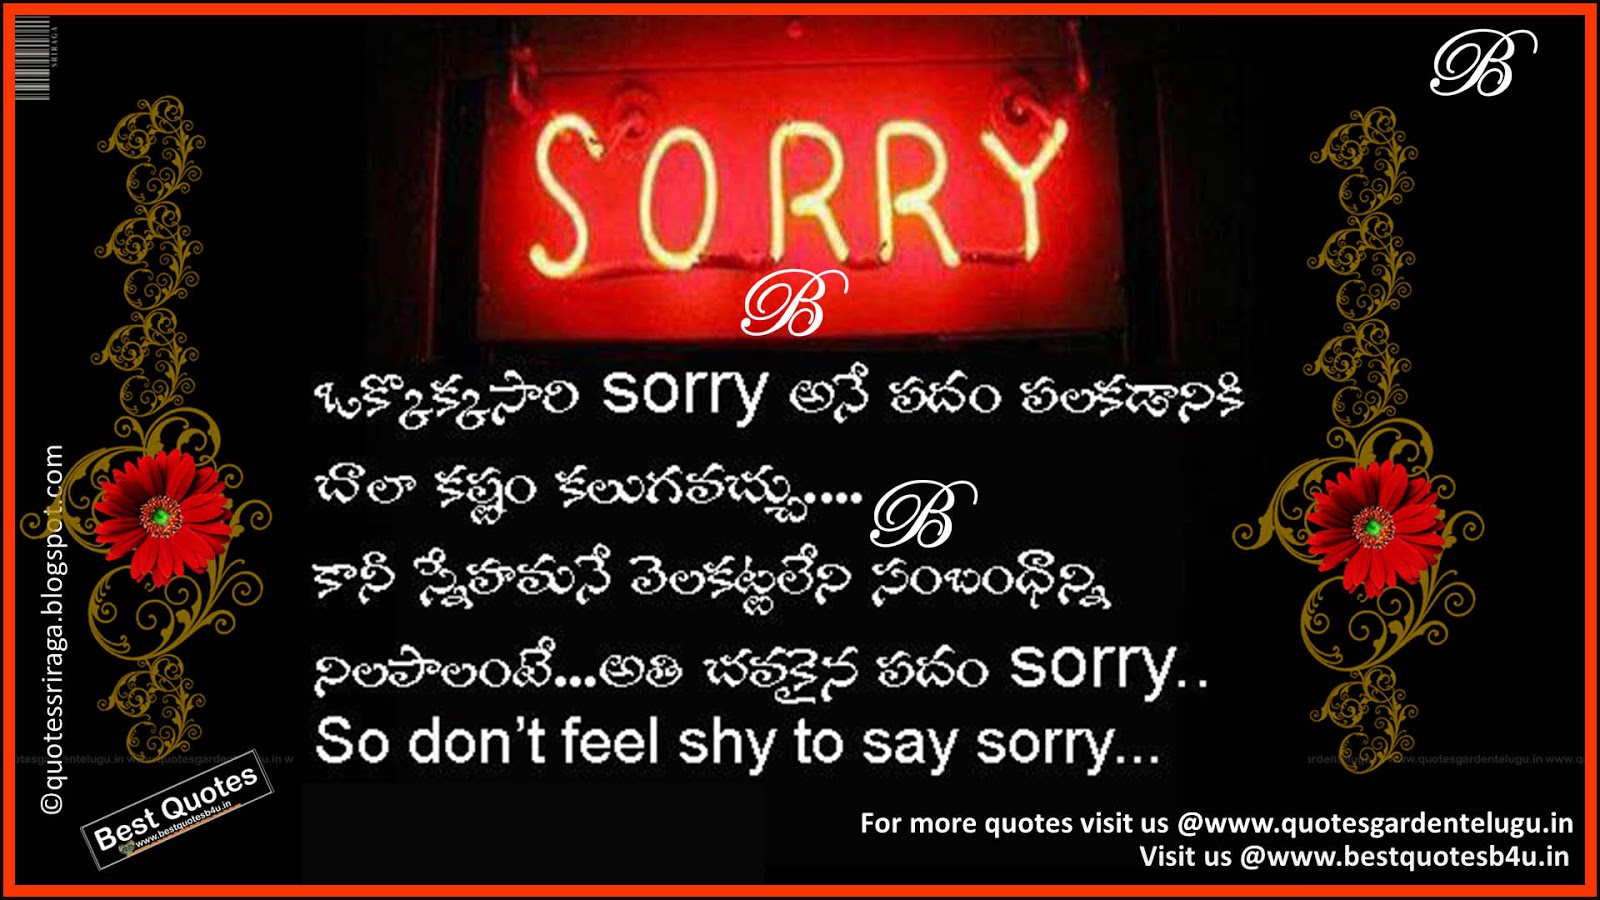 Friendship Quotes Saying Sorry Best telugu friendship quotes bestquotesb u english